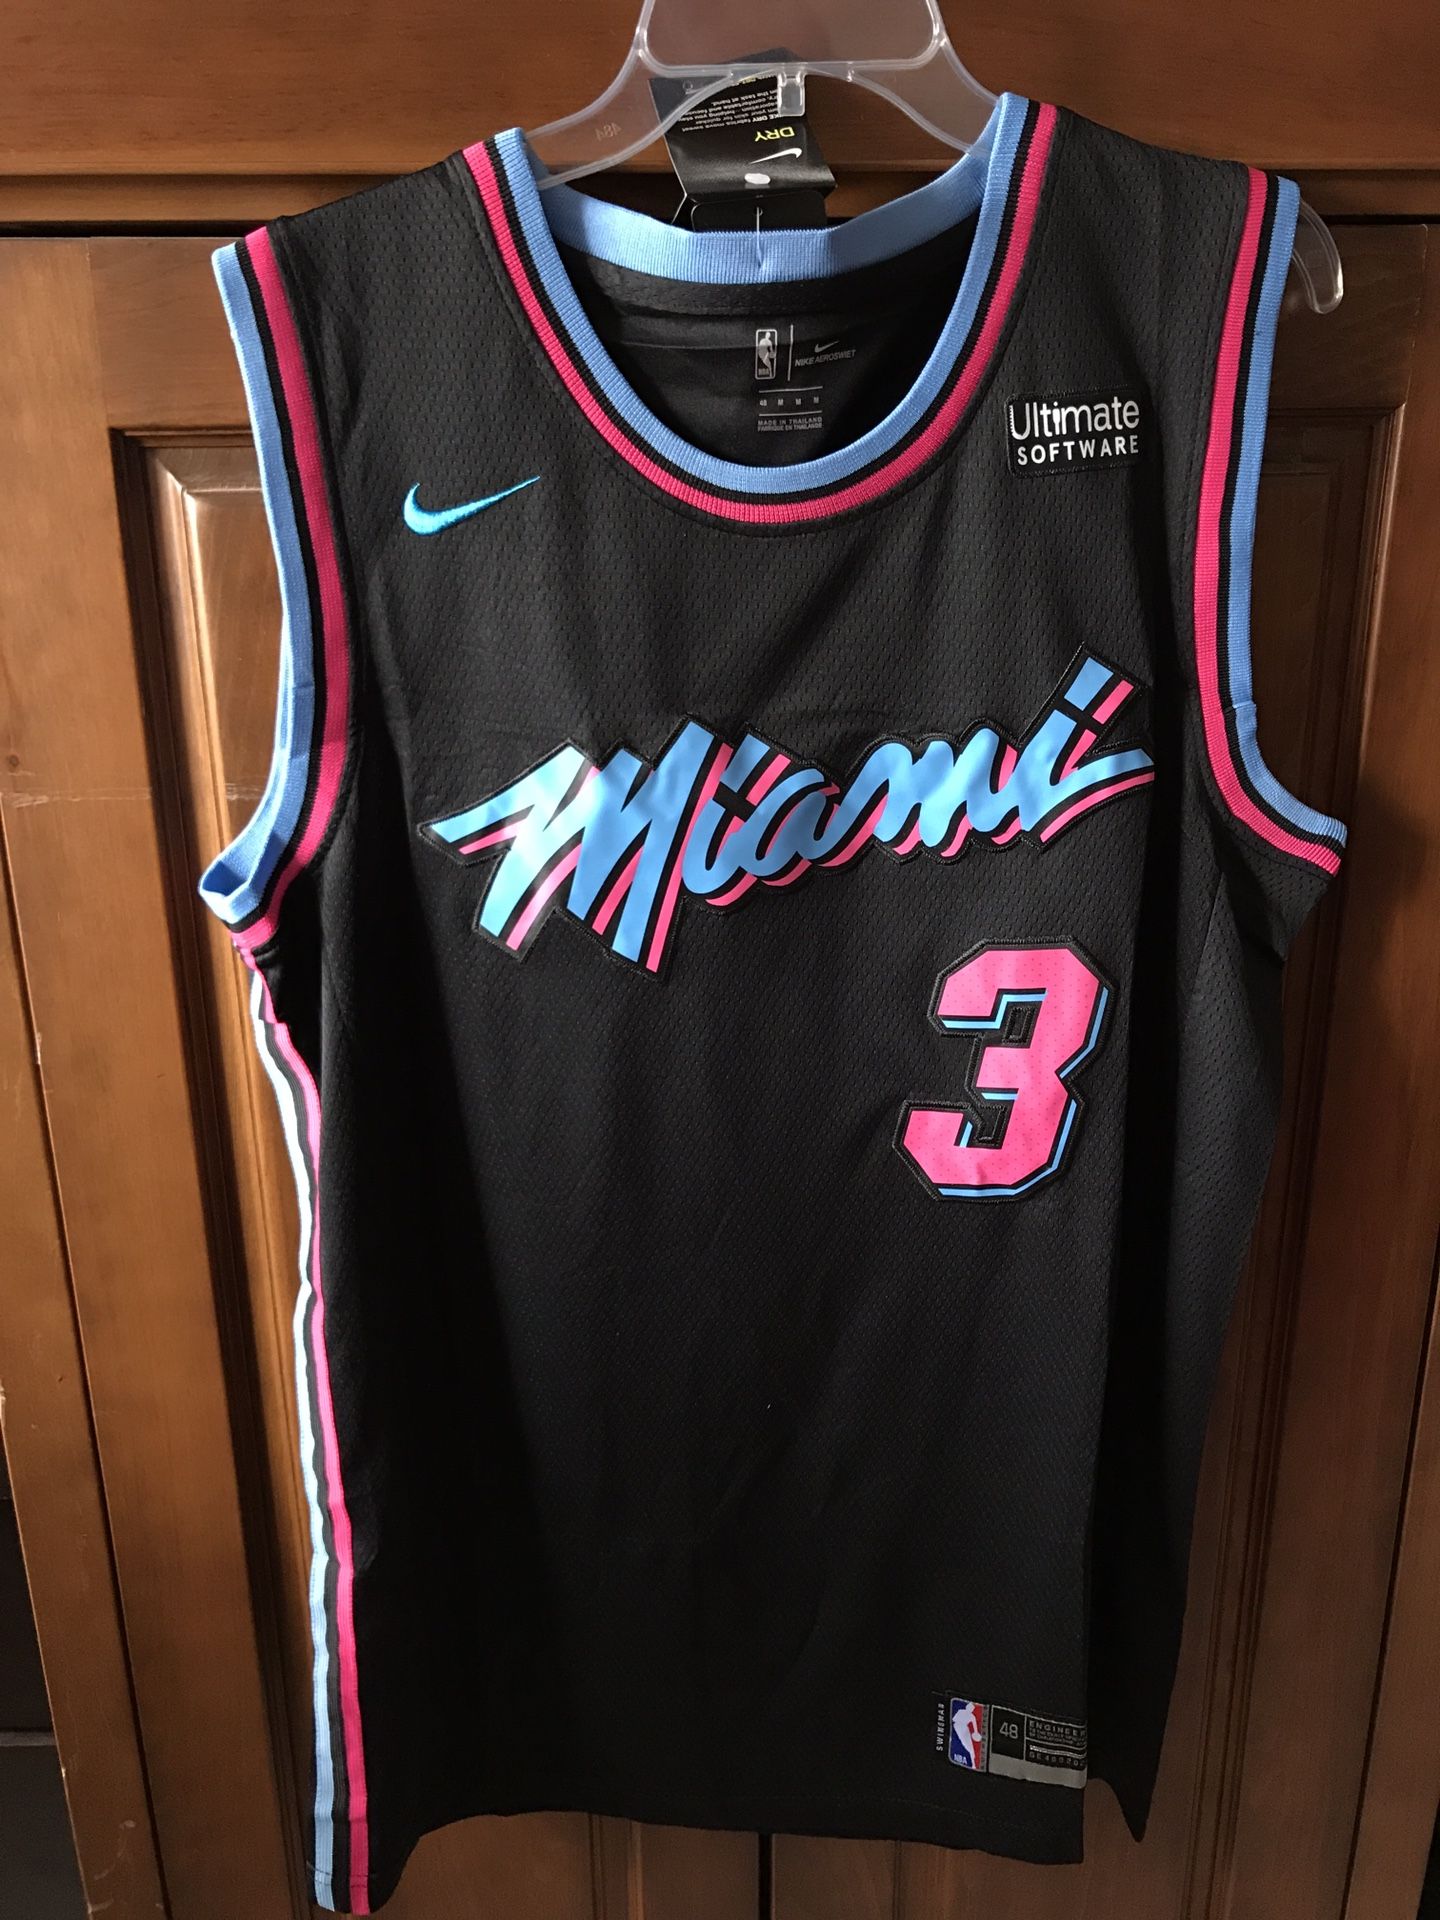 Dwayne Wade Miami Heat 90s Version Jersey! for Sale in Vero Beach, FL -  OfferUp